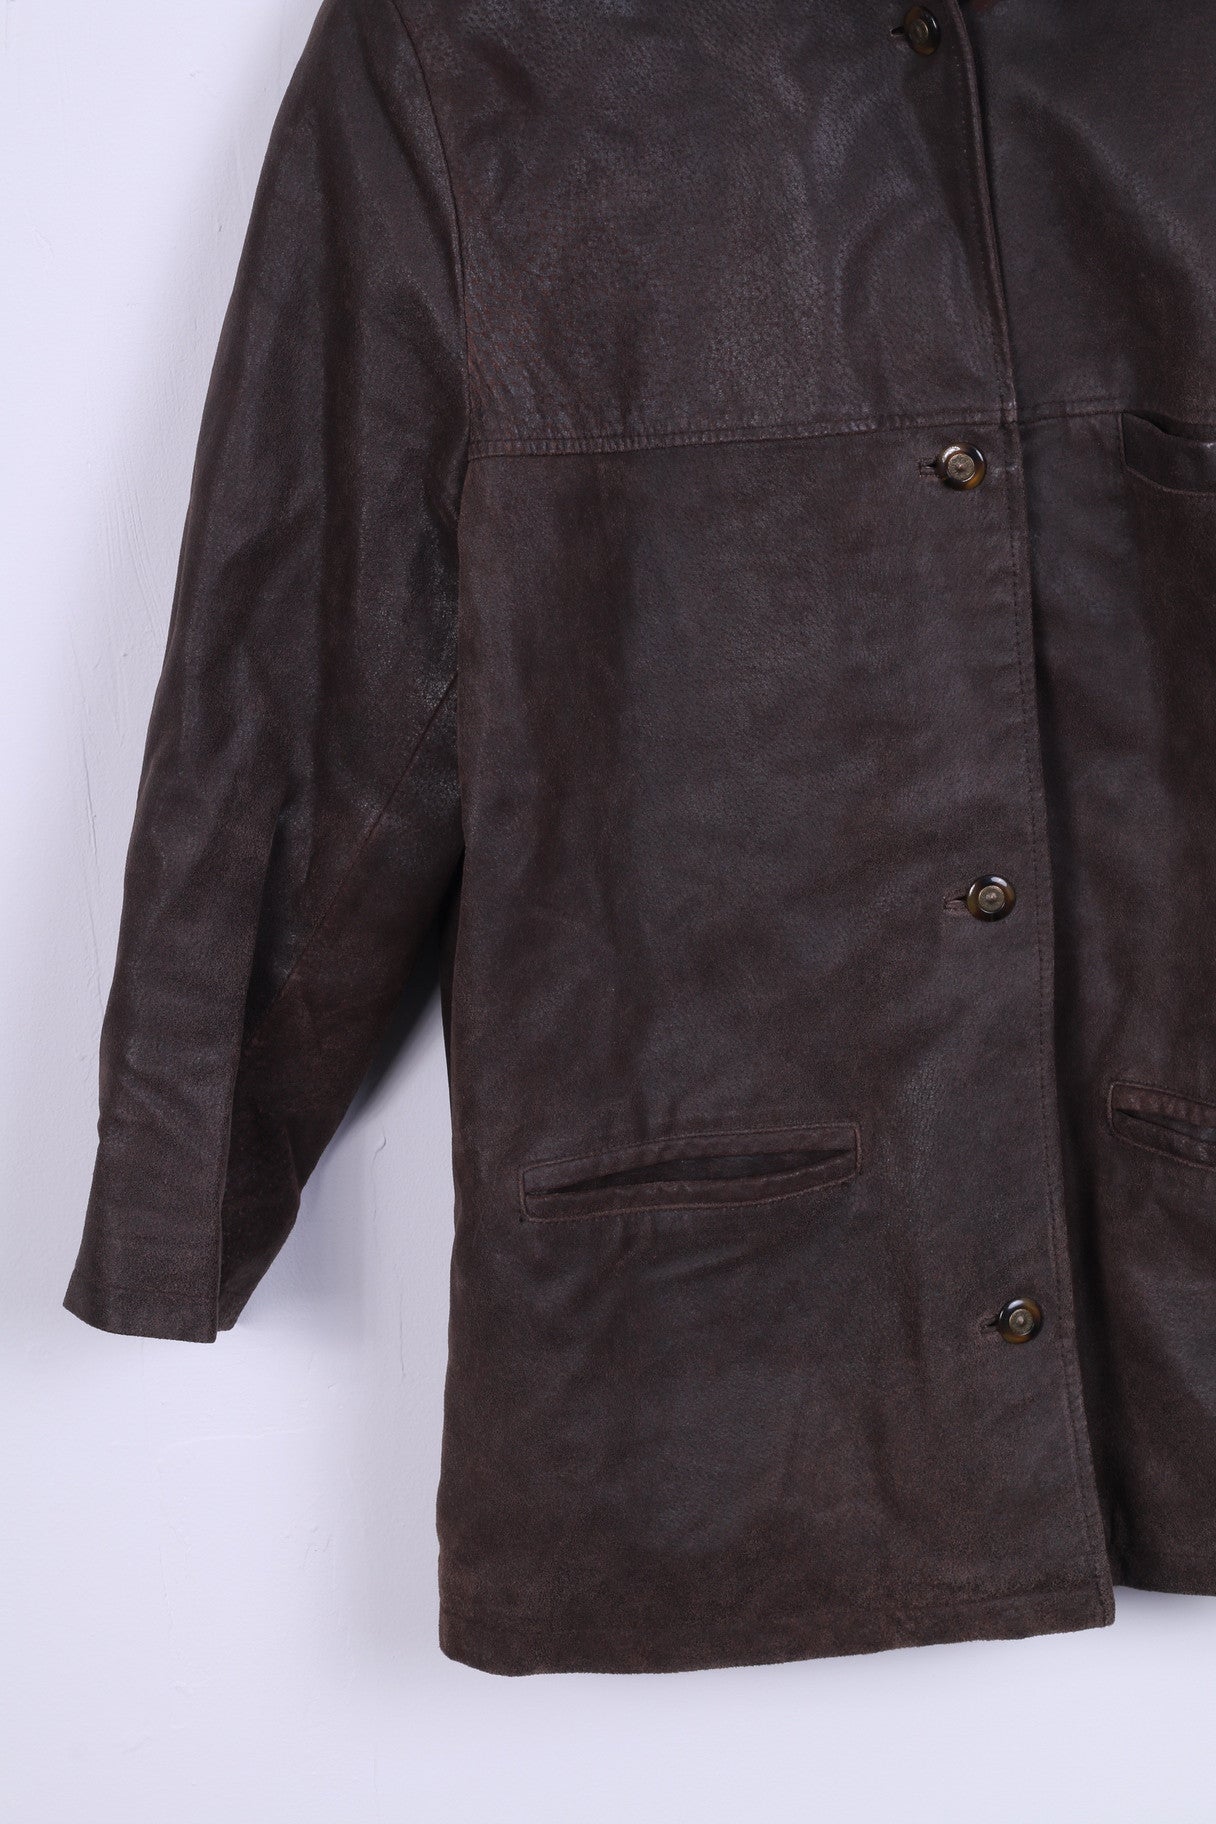 Vintage Womens 40 XL Jacket Brown Leather Single Breasted Shoulder Pads